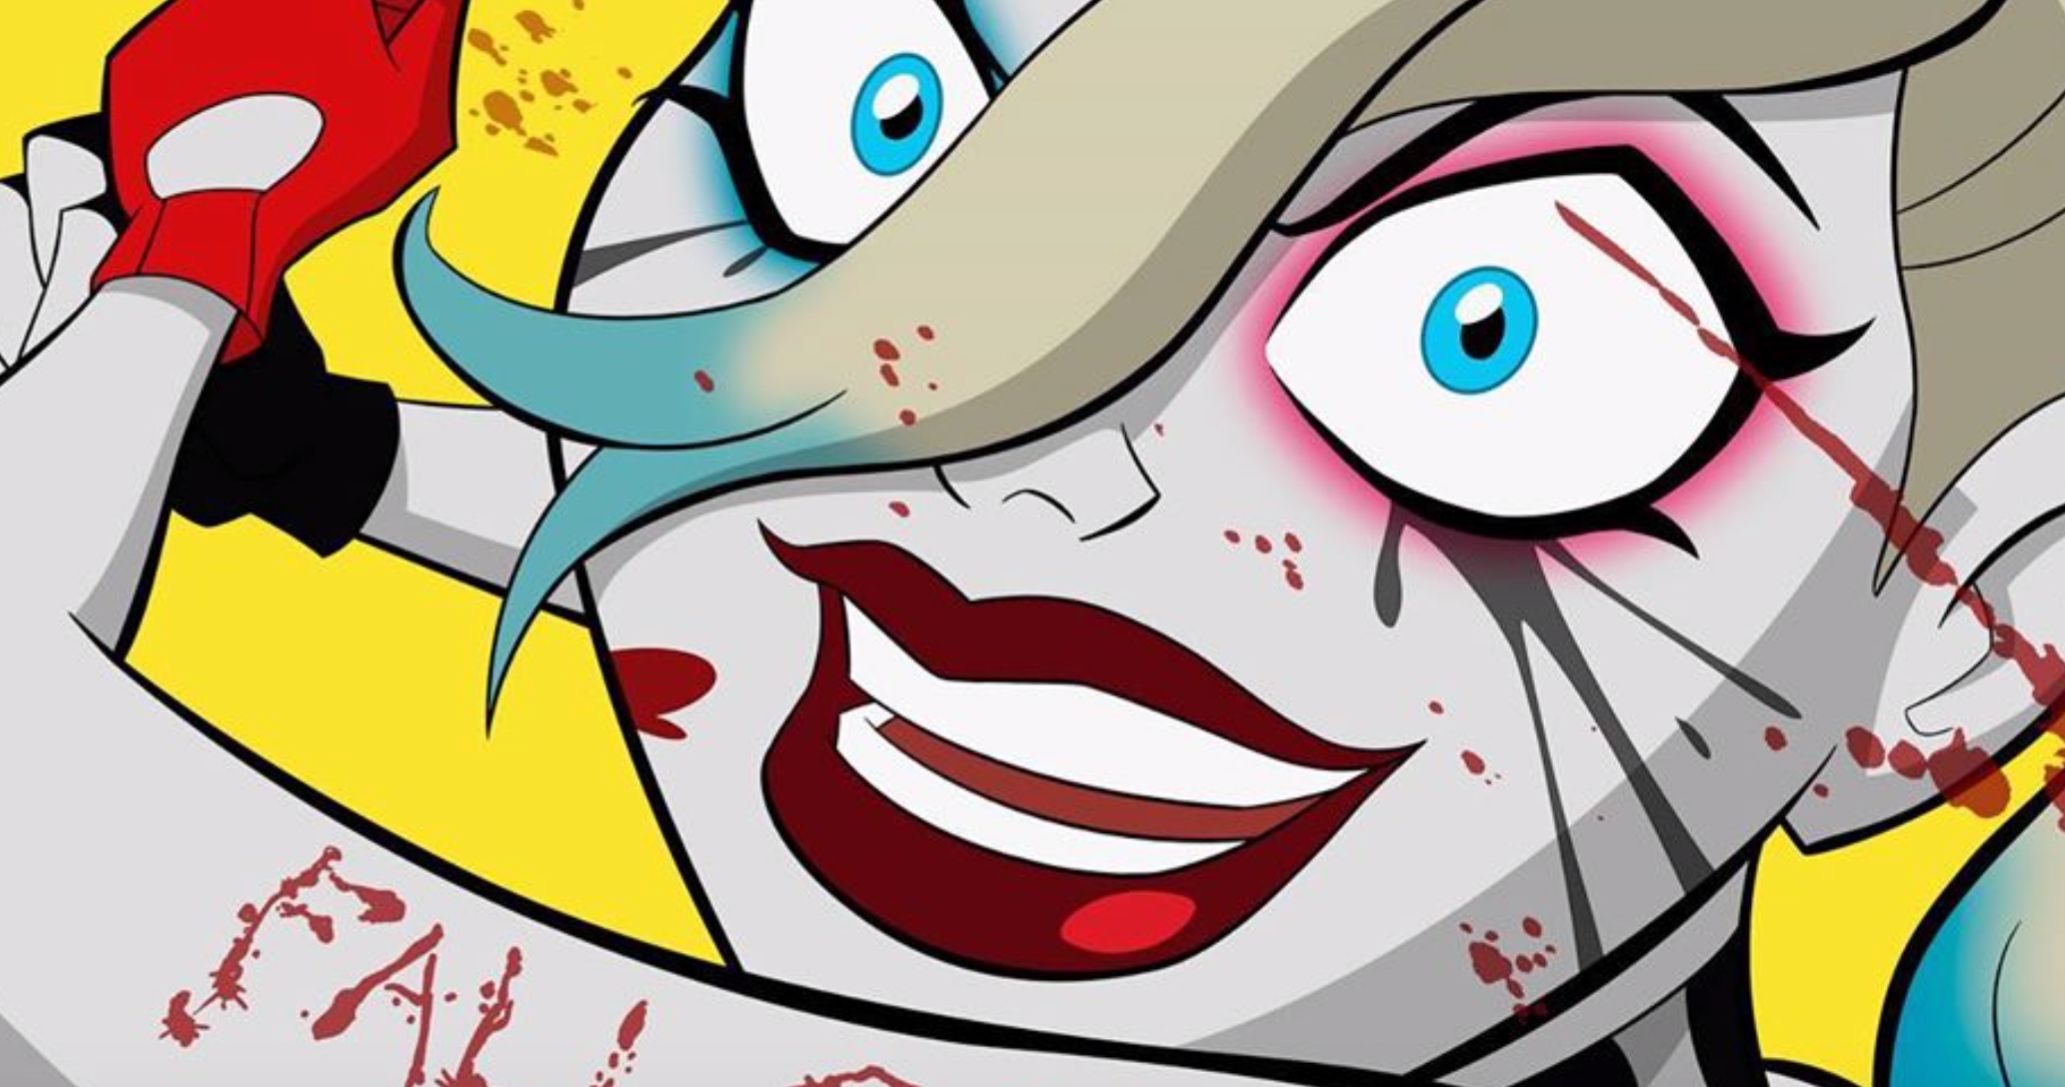 Blood-Splattered Harley Quinn Poster Announces Fall 2019 Release Date